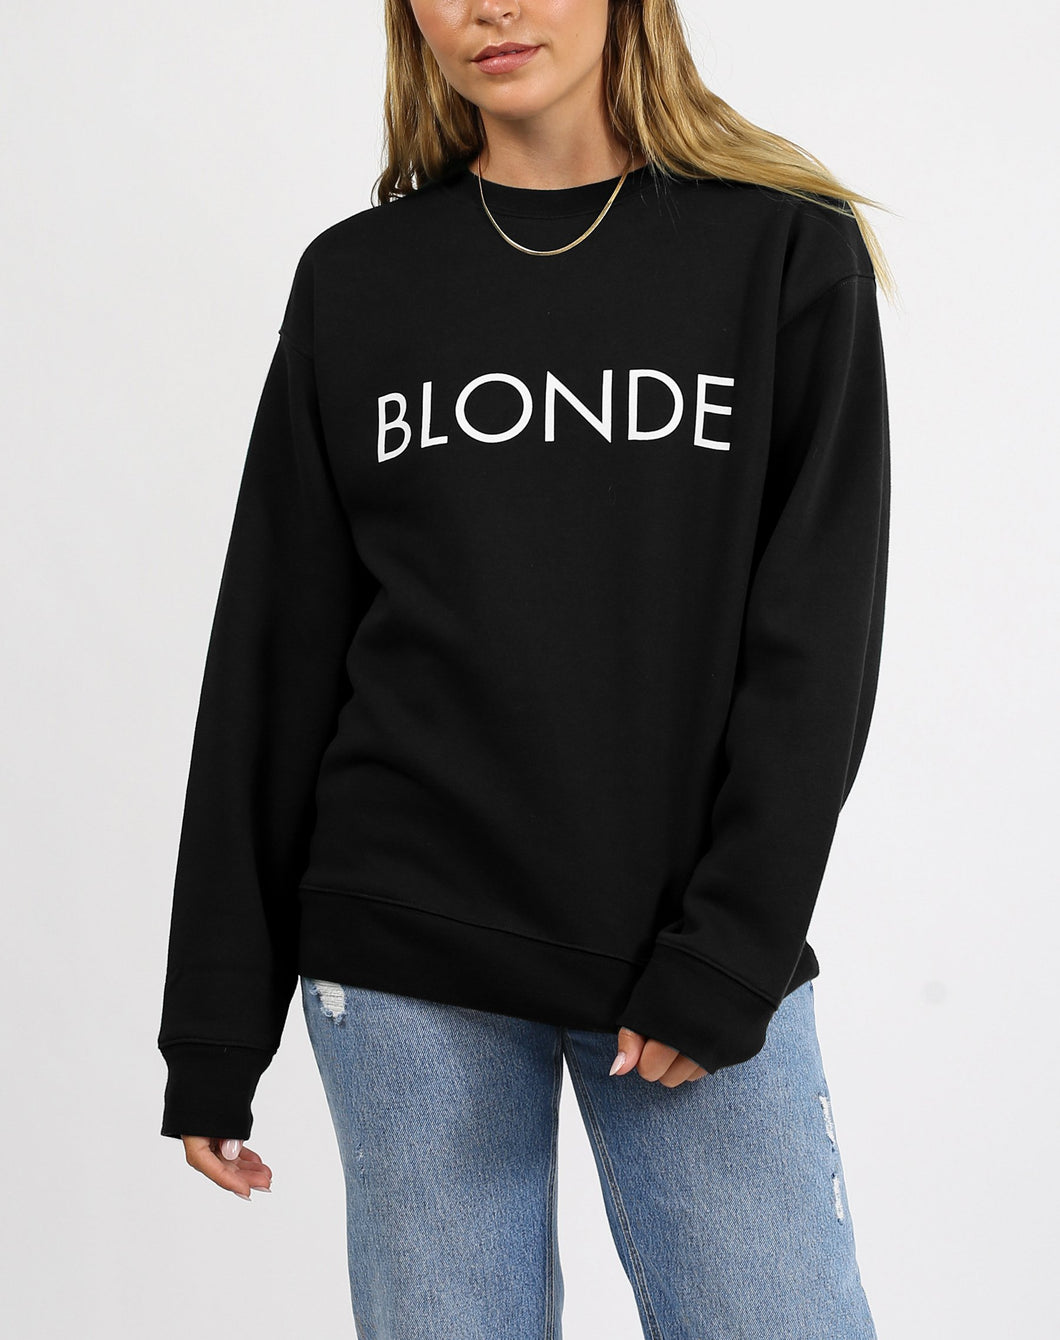 'Blonde' Classic Crew Neck Sweatshirt